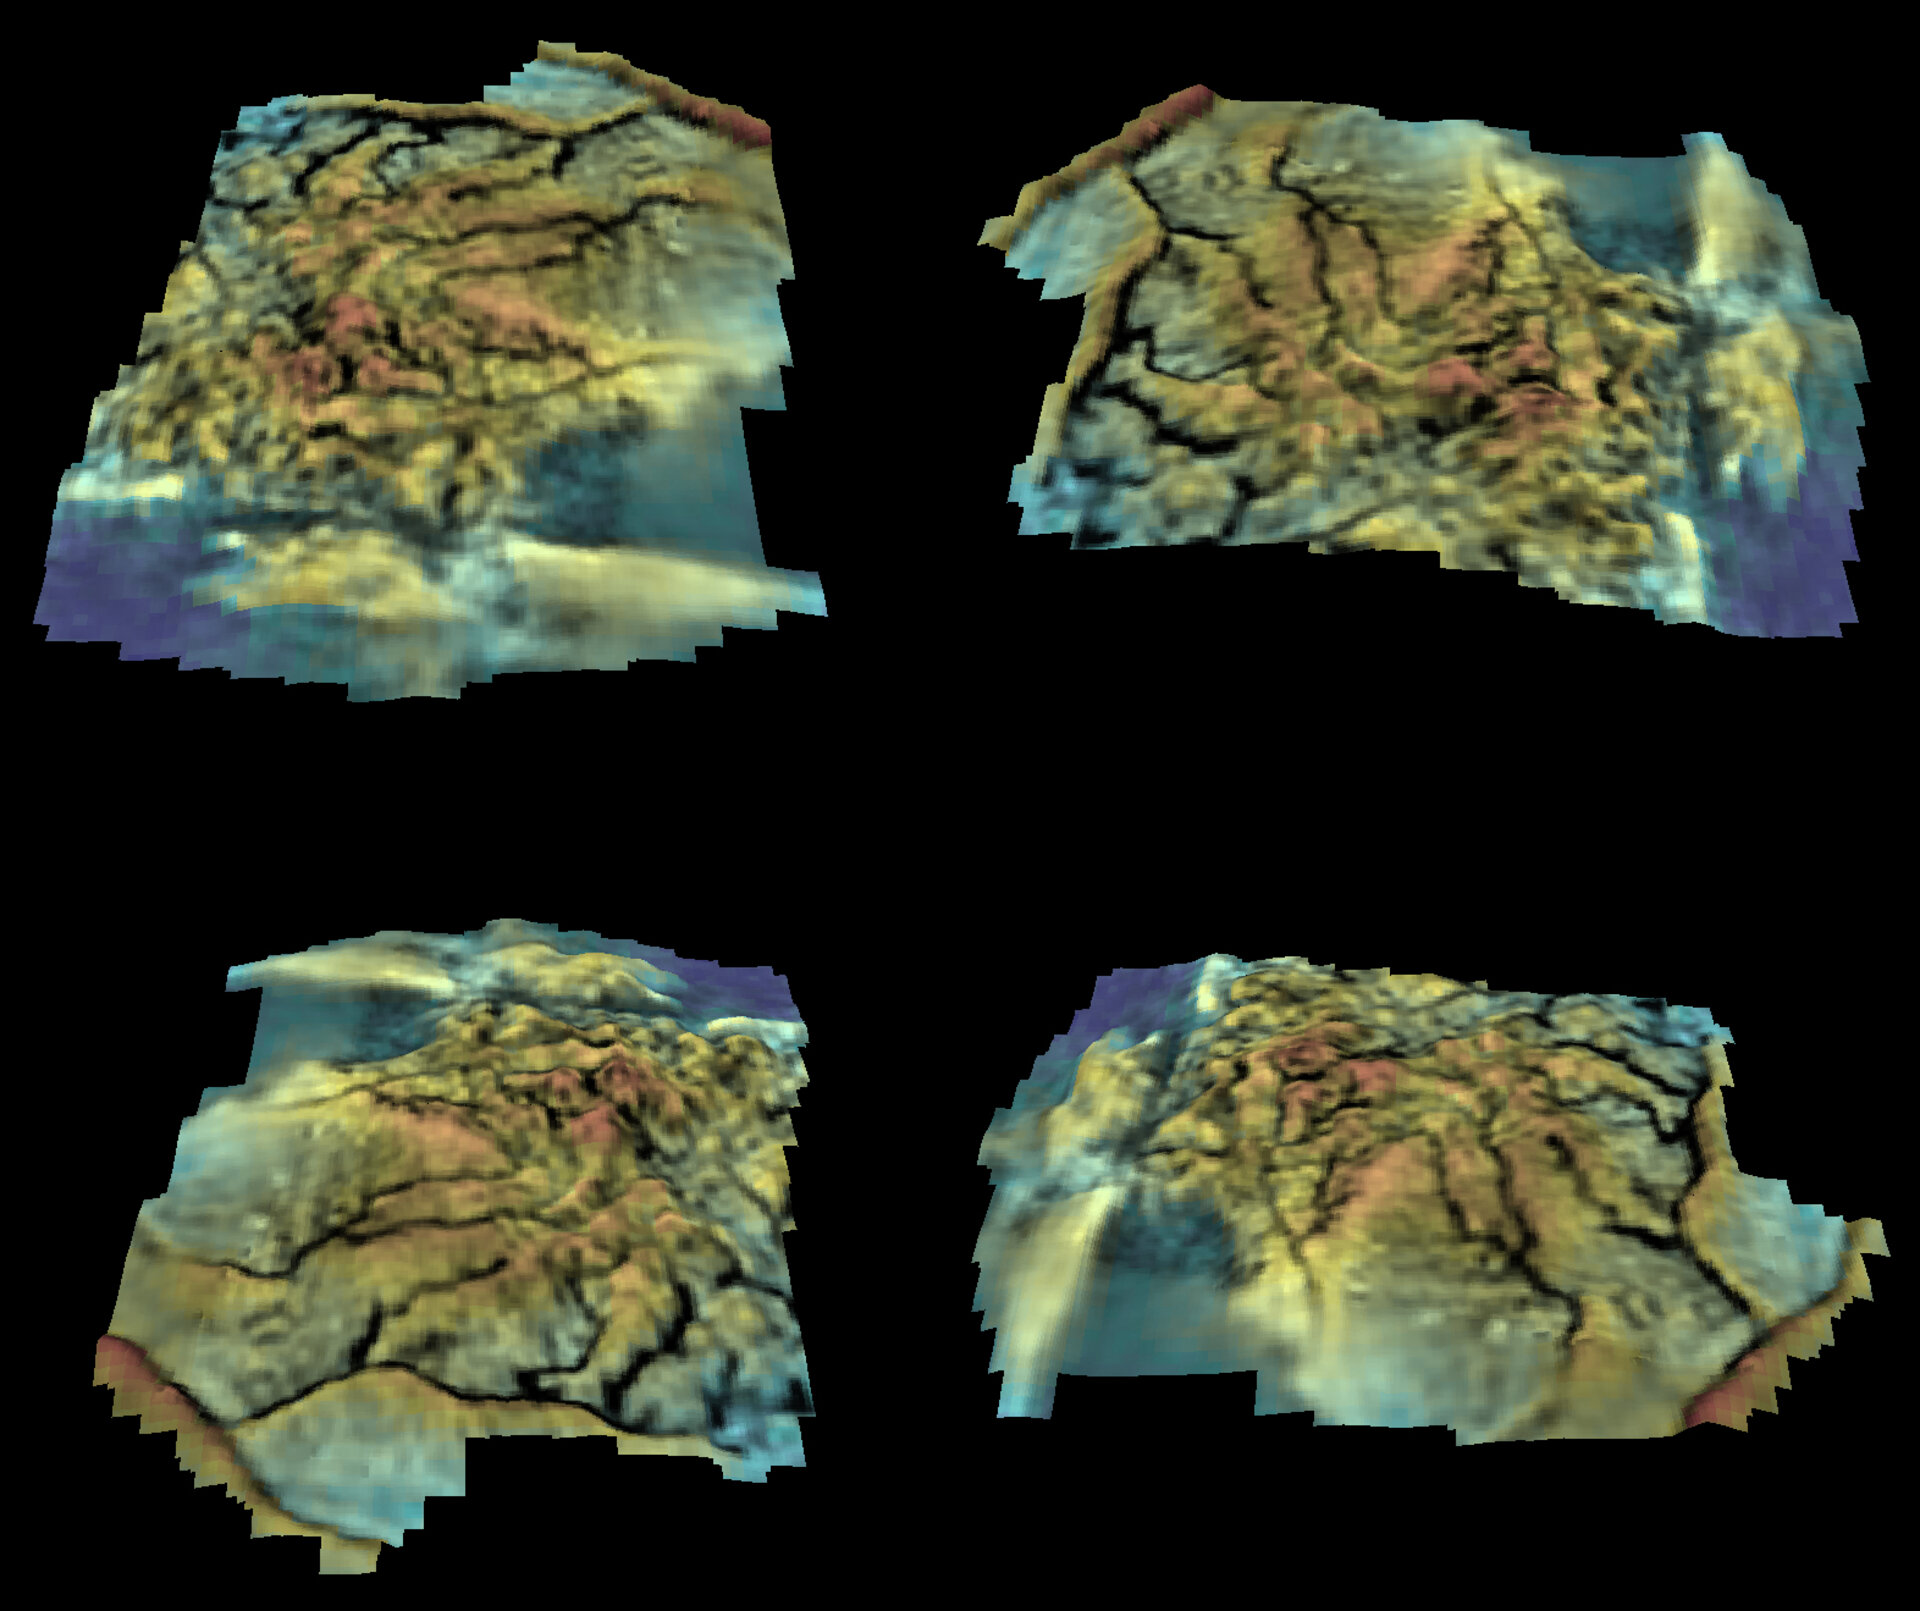 Digital terrain model of a portion of Huygens’ landing region